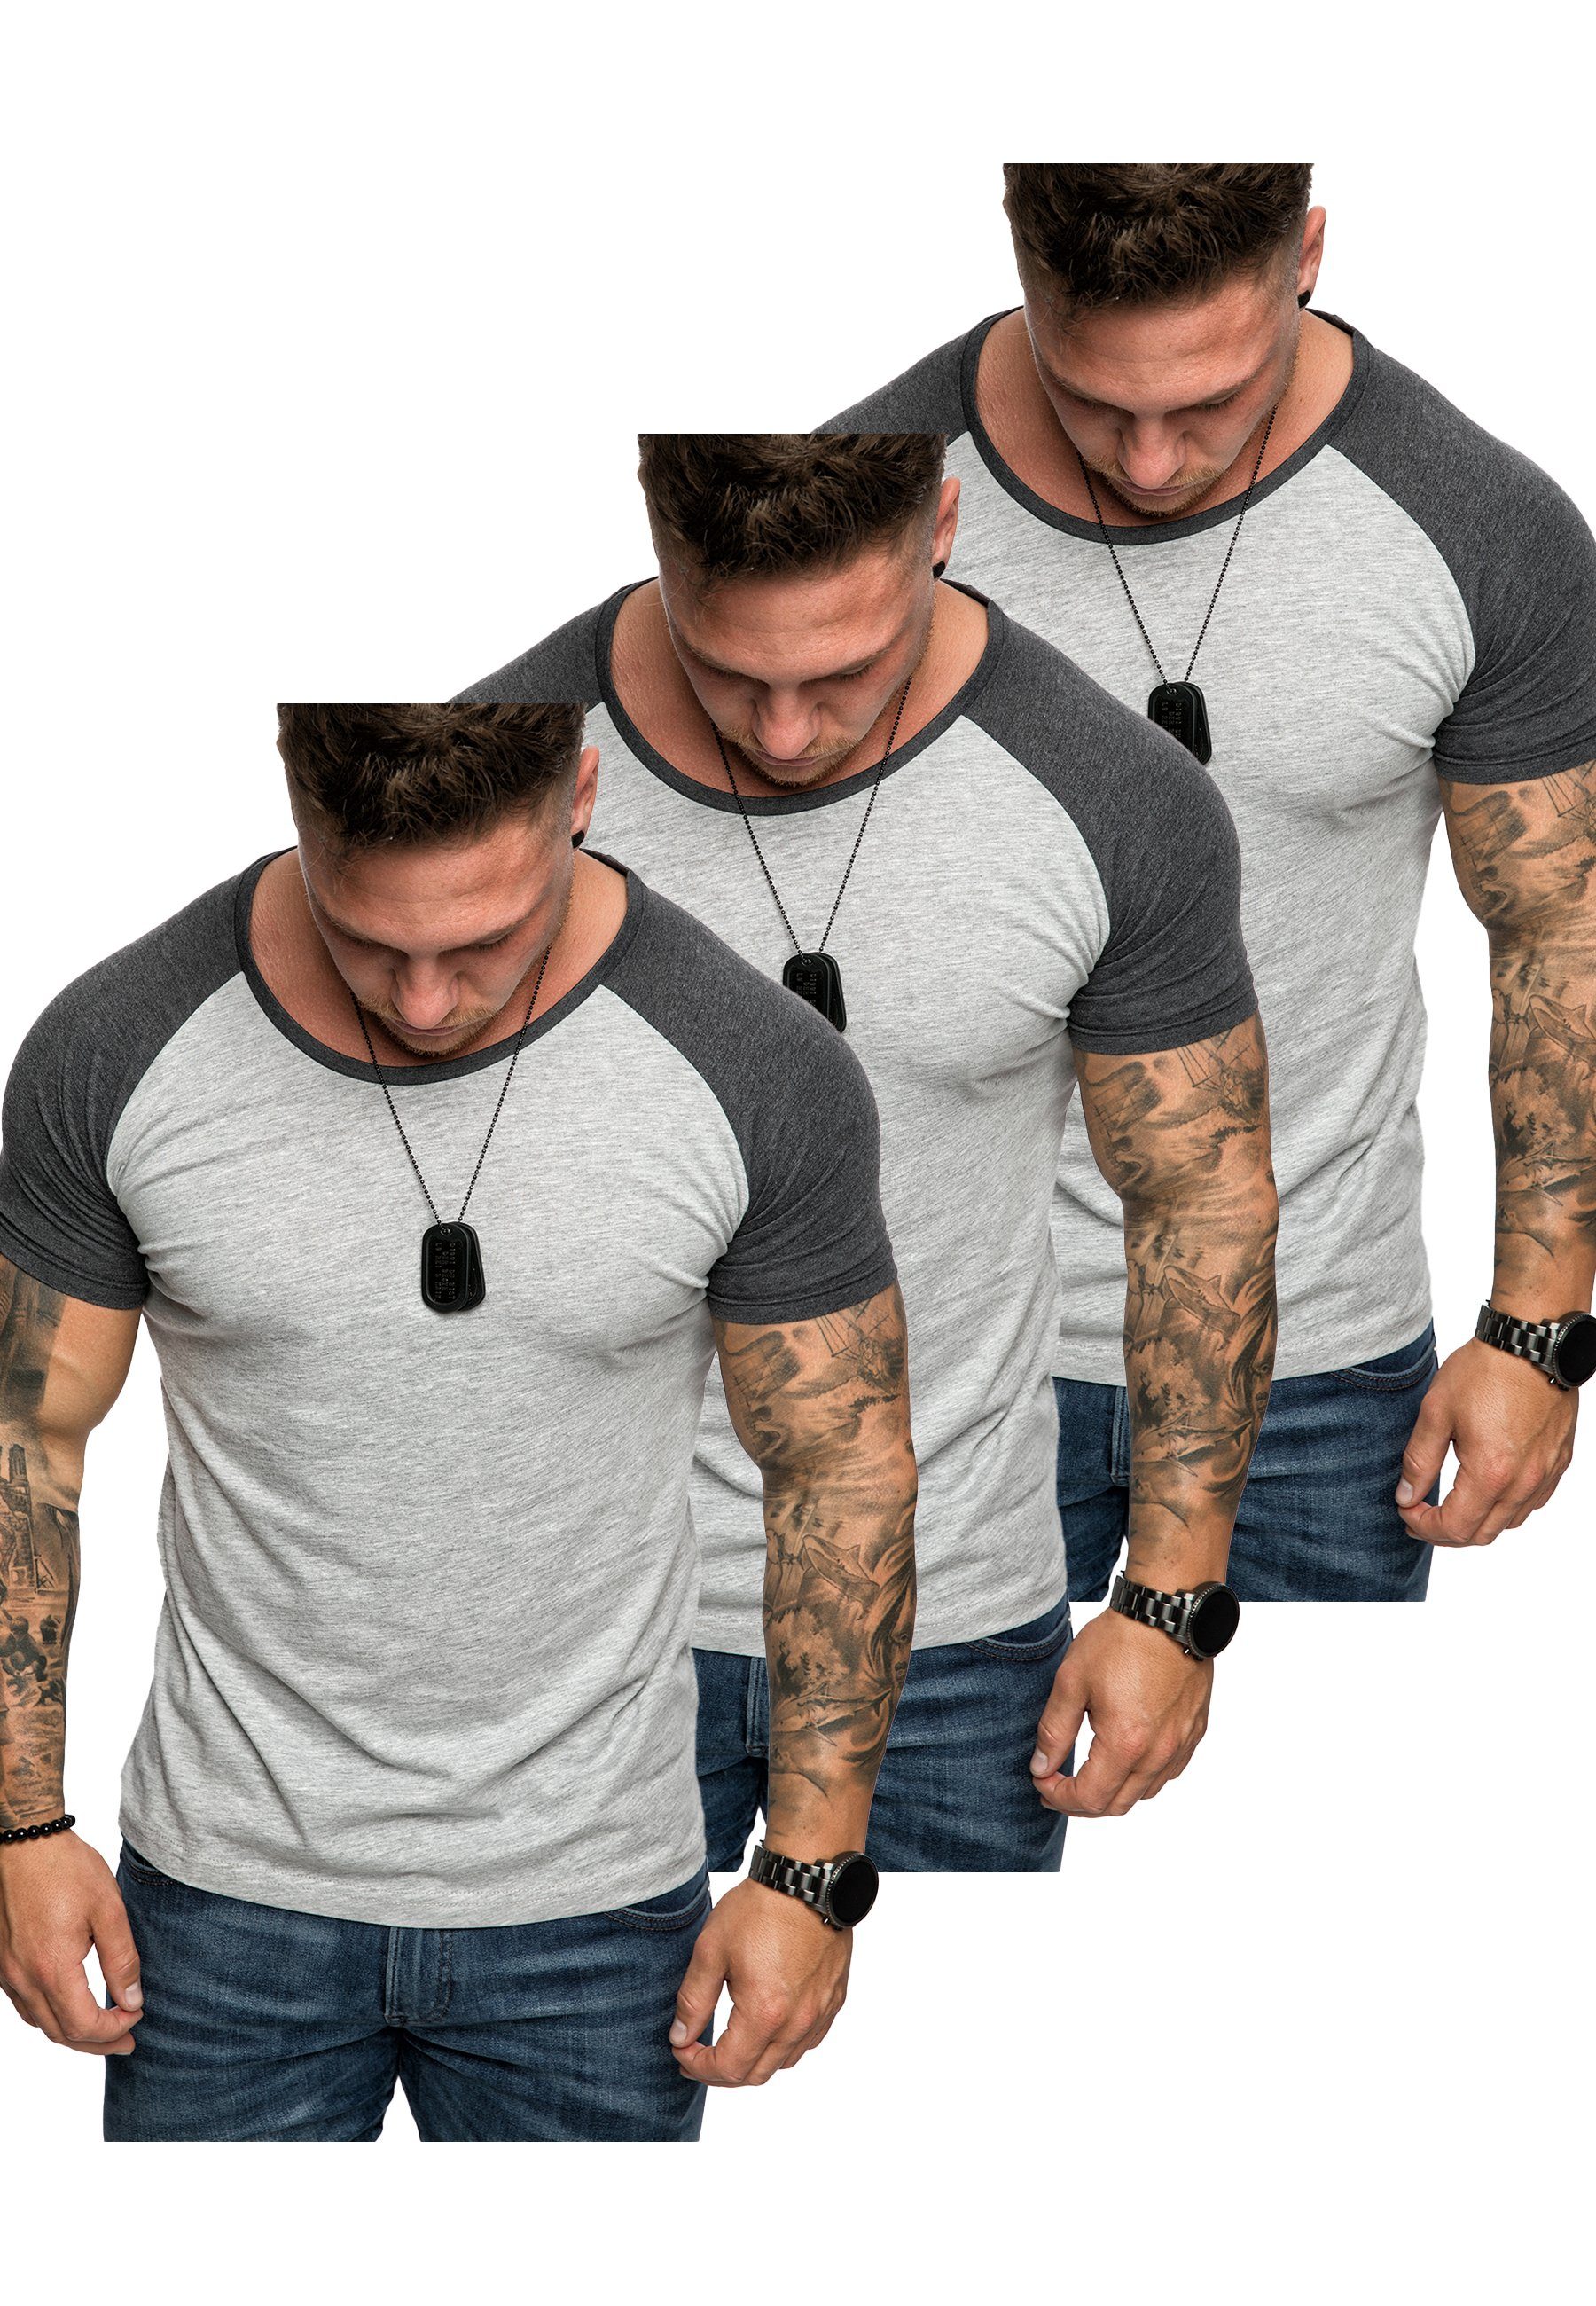 T-Shirt Raglan Grau/Anthrazit) Kontrast T-Shirts 3er-Pack 3. Oversize SALEM T-Shirt Amaci&Sons Basic Herren (3x (3er-Pack)